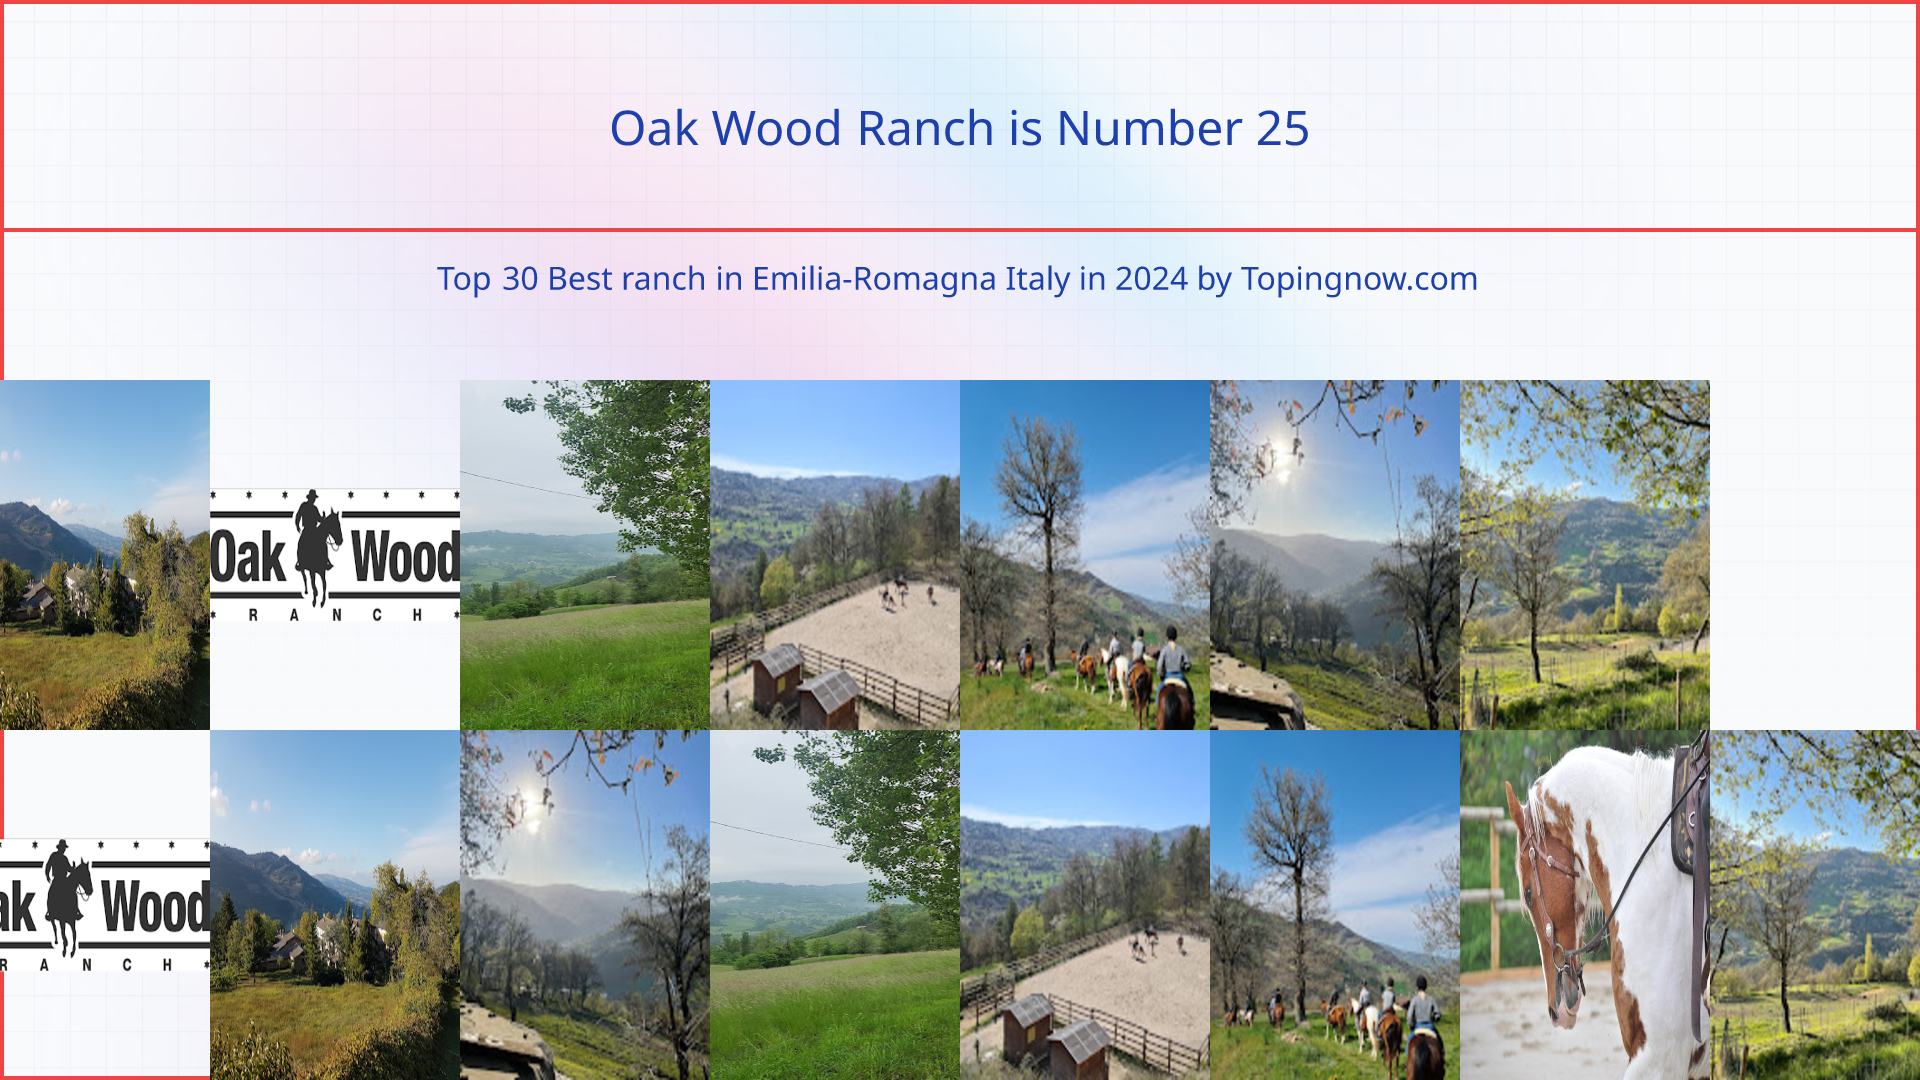 Oak Wood Ranch: Top 30 Best ranch in Emilia-Romagna Italy in 2024